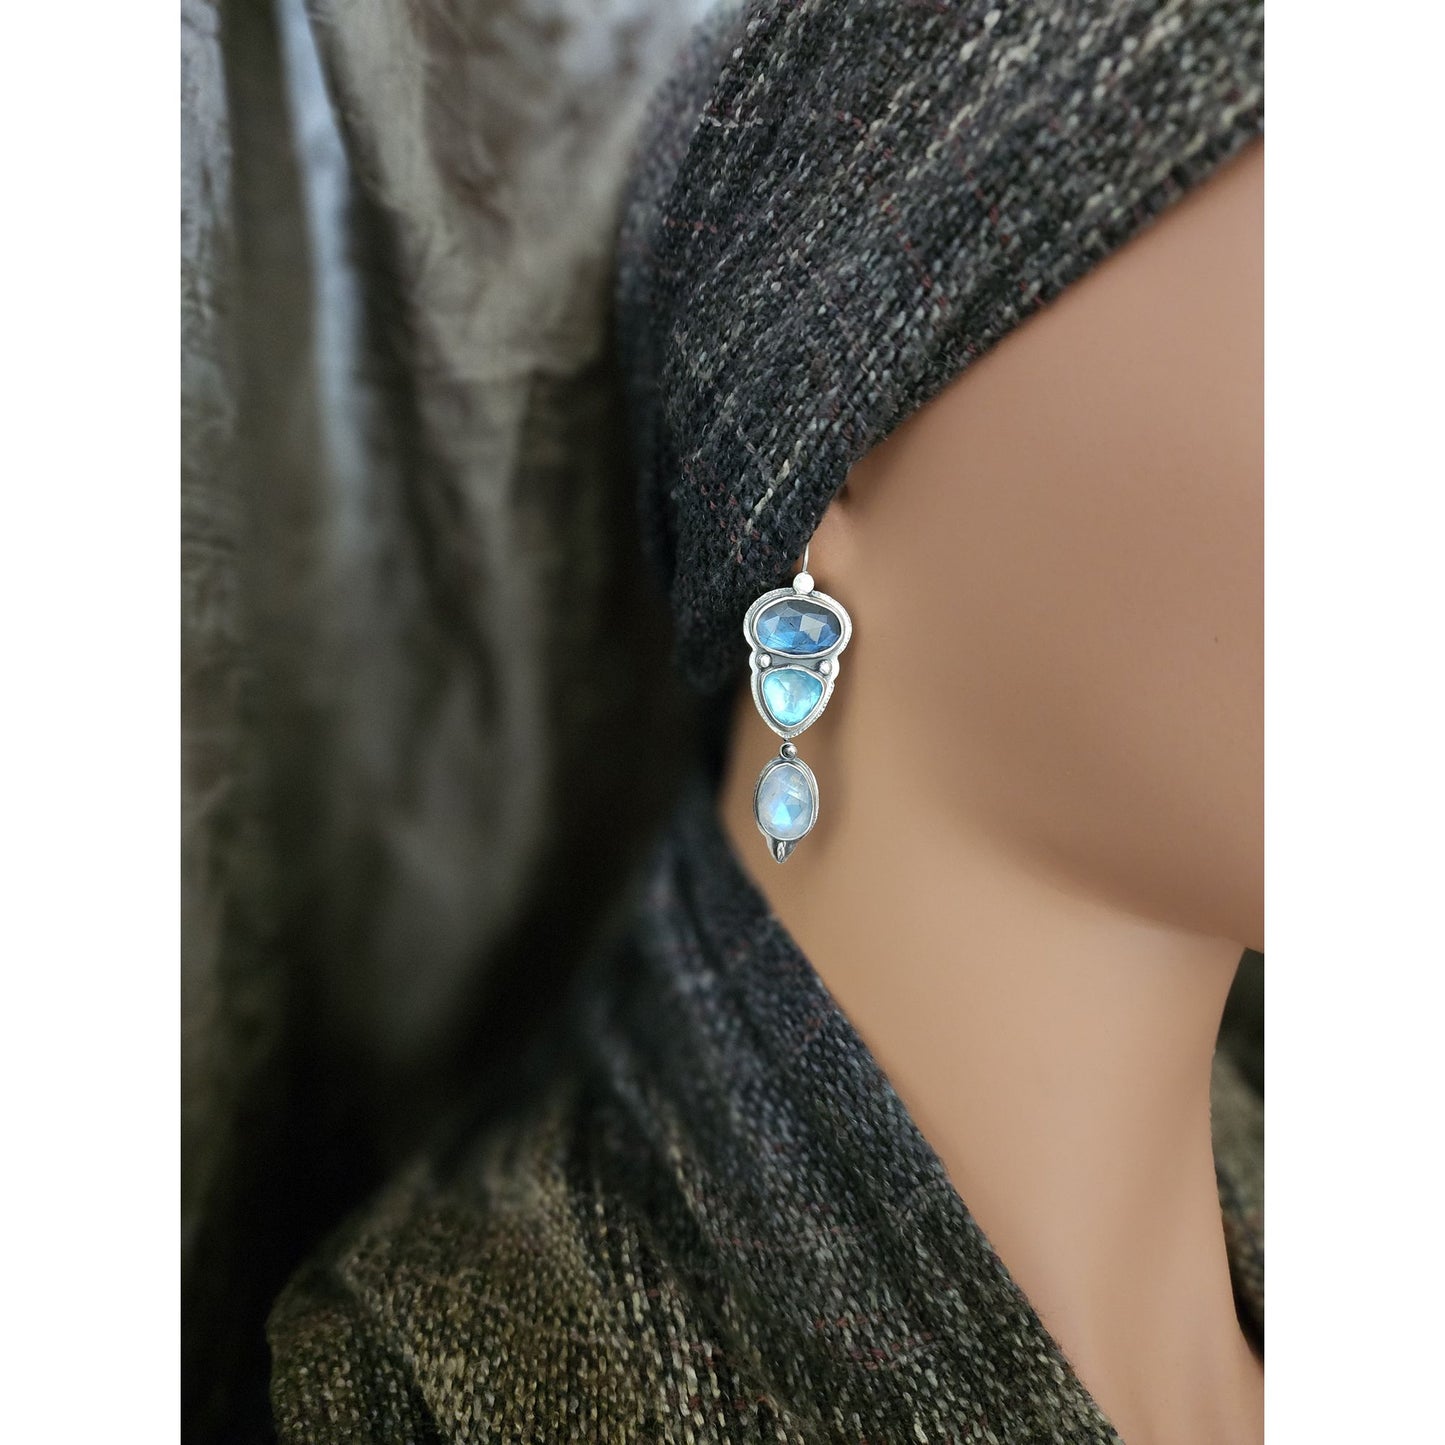 Northern Lights earrings